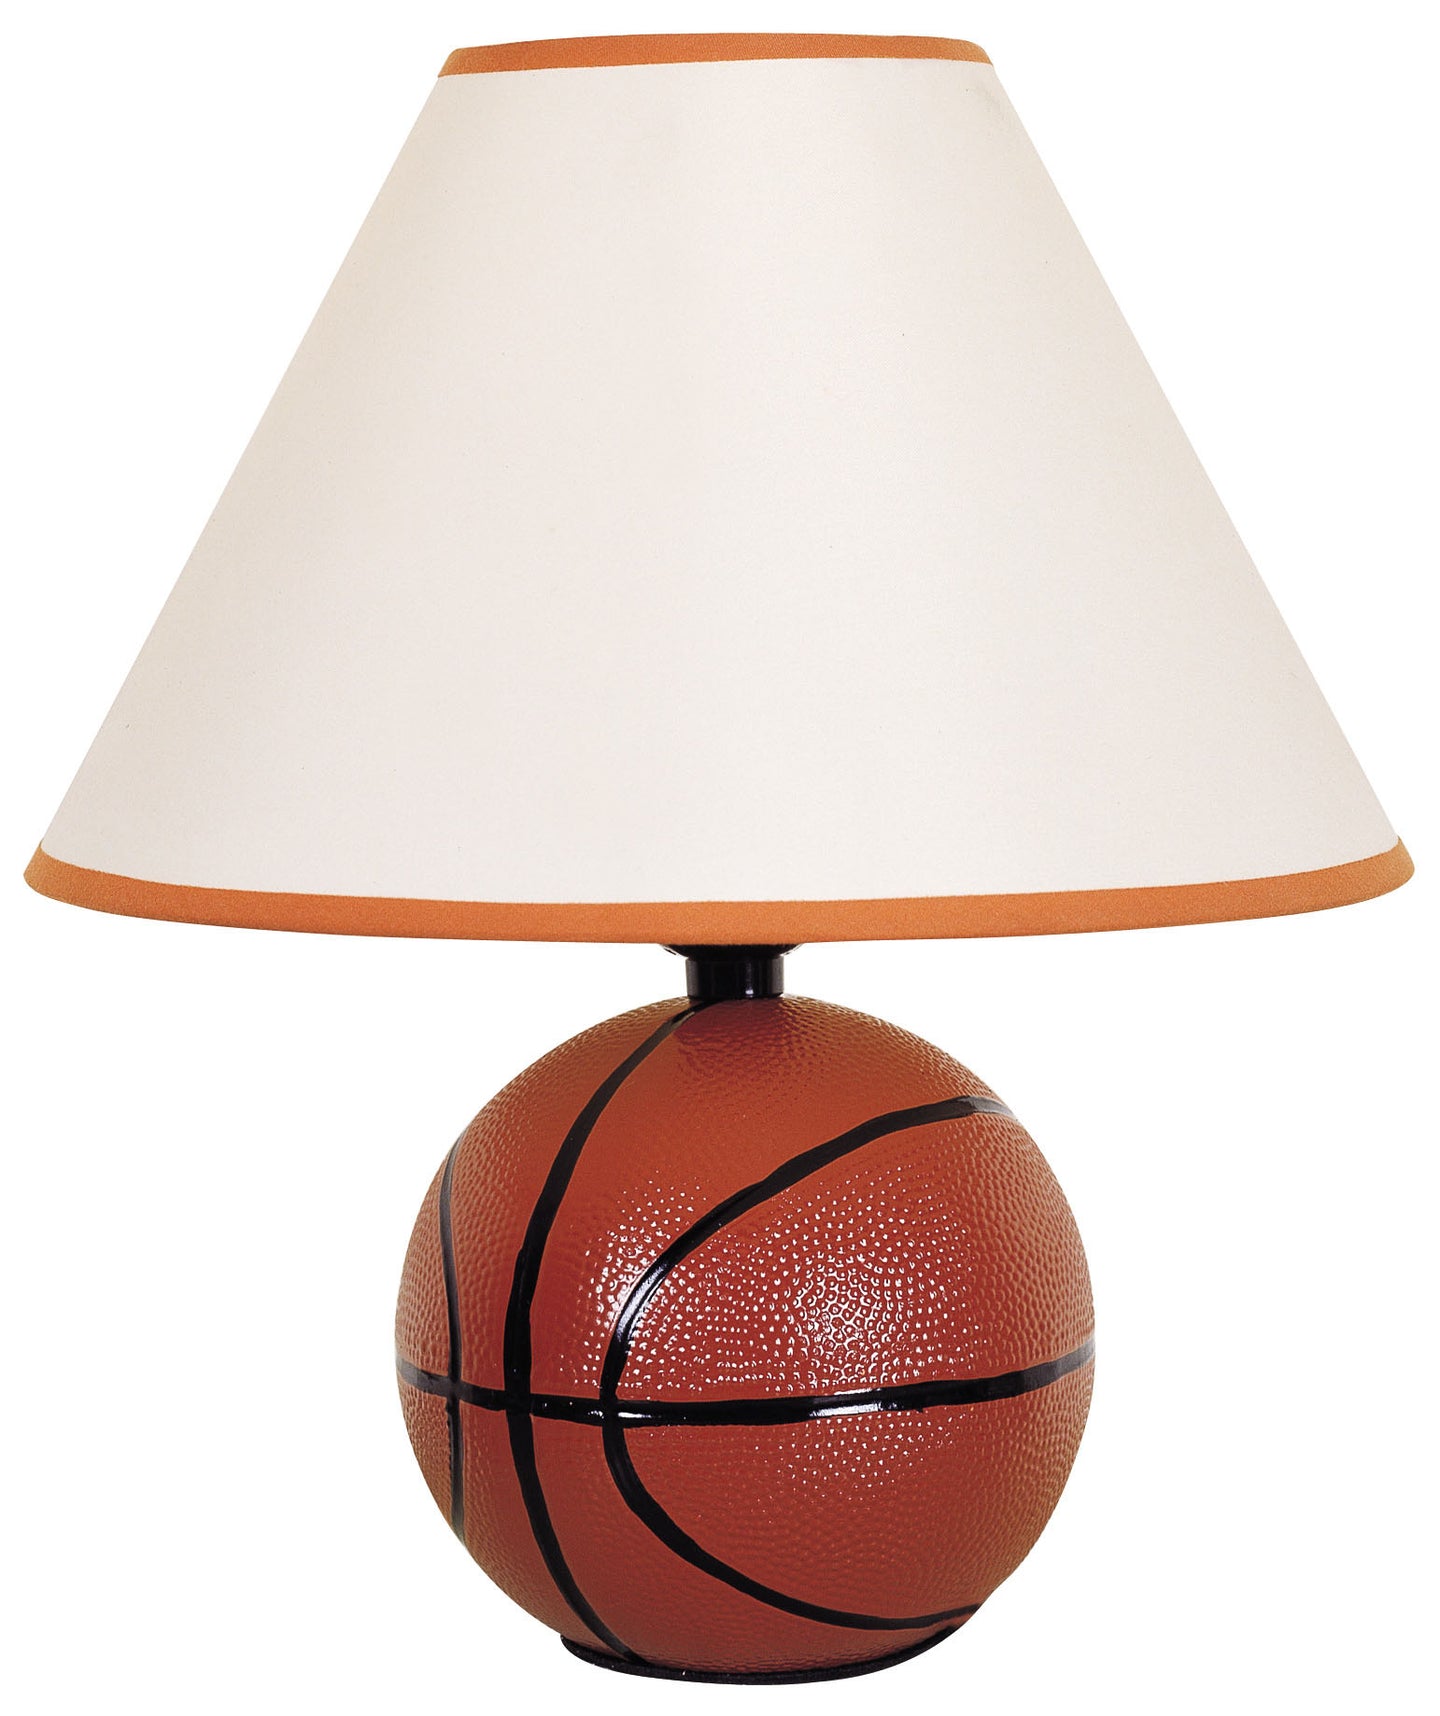 All Star Basketball Table Lamp